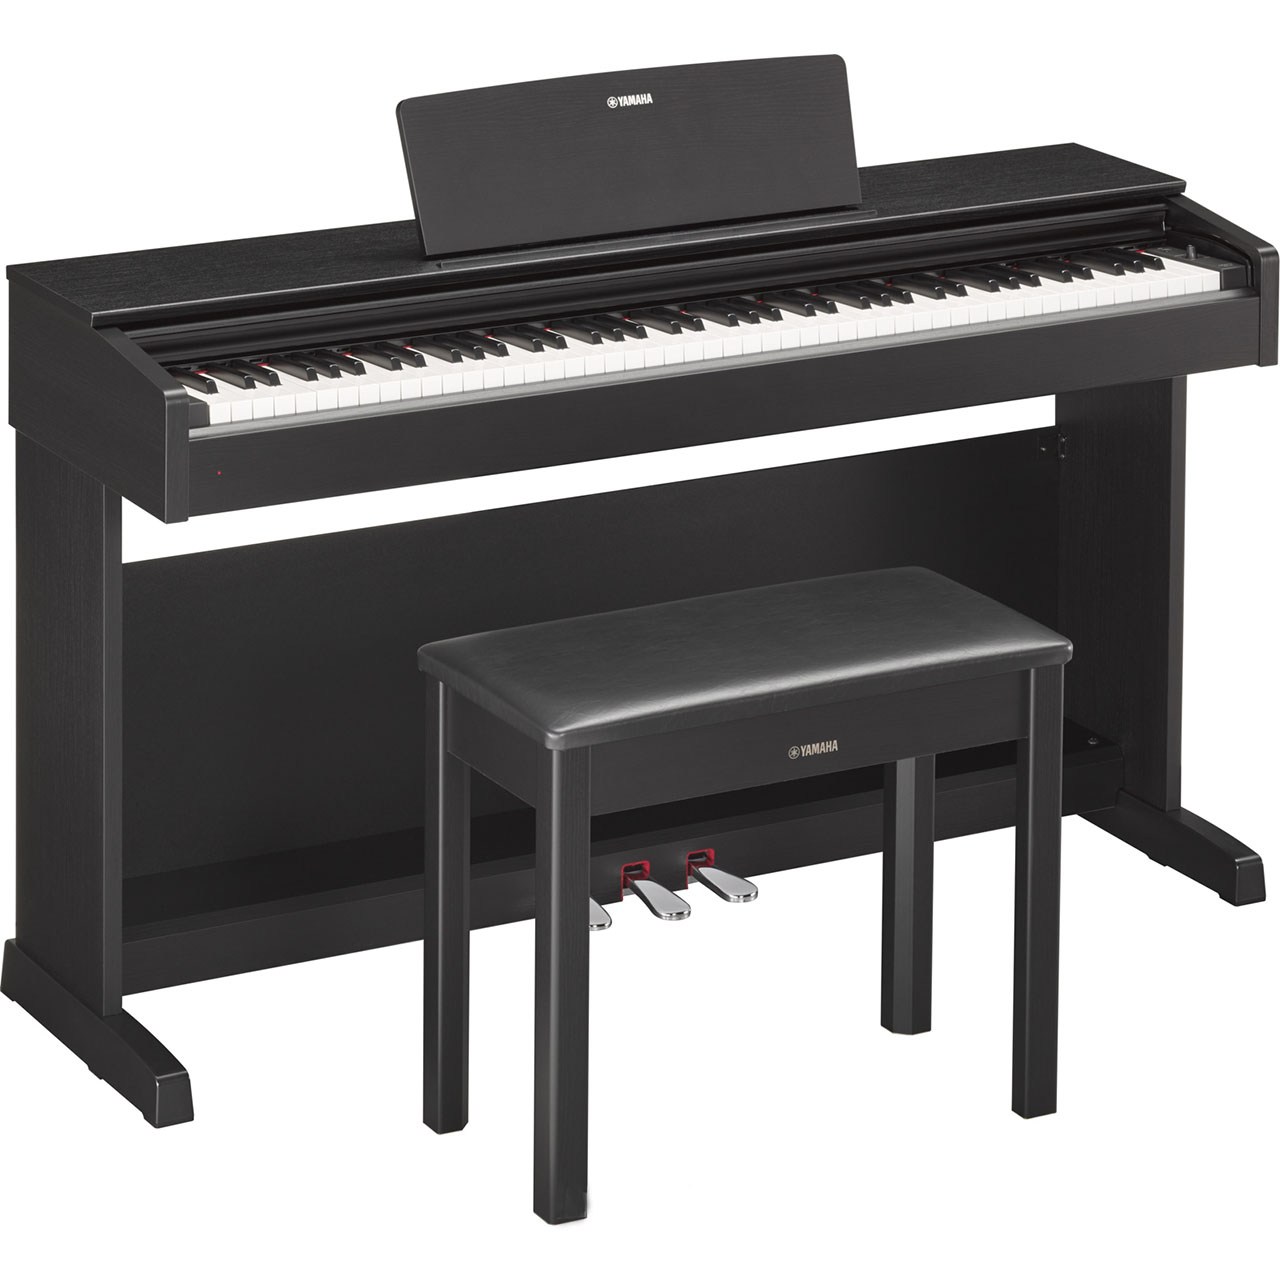 پیانو دیجیتال یاماها مدل YDP-143